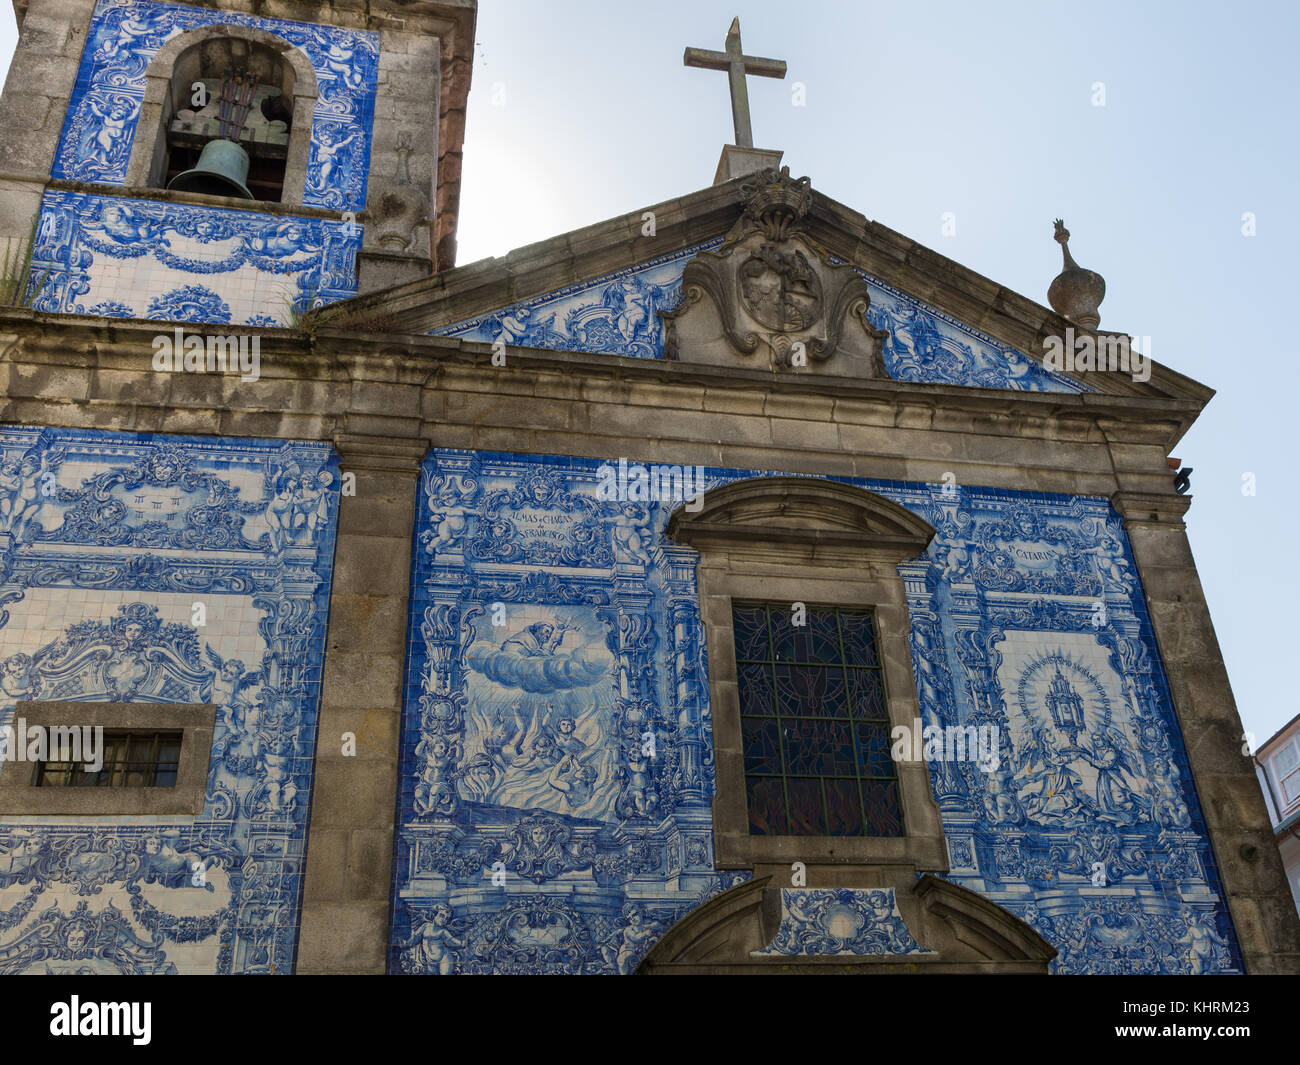 Capela das almas décoré de carreaux azulejo - Capela de Santa Catarina à Porto, Portugal. Banque D'Images